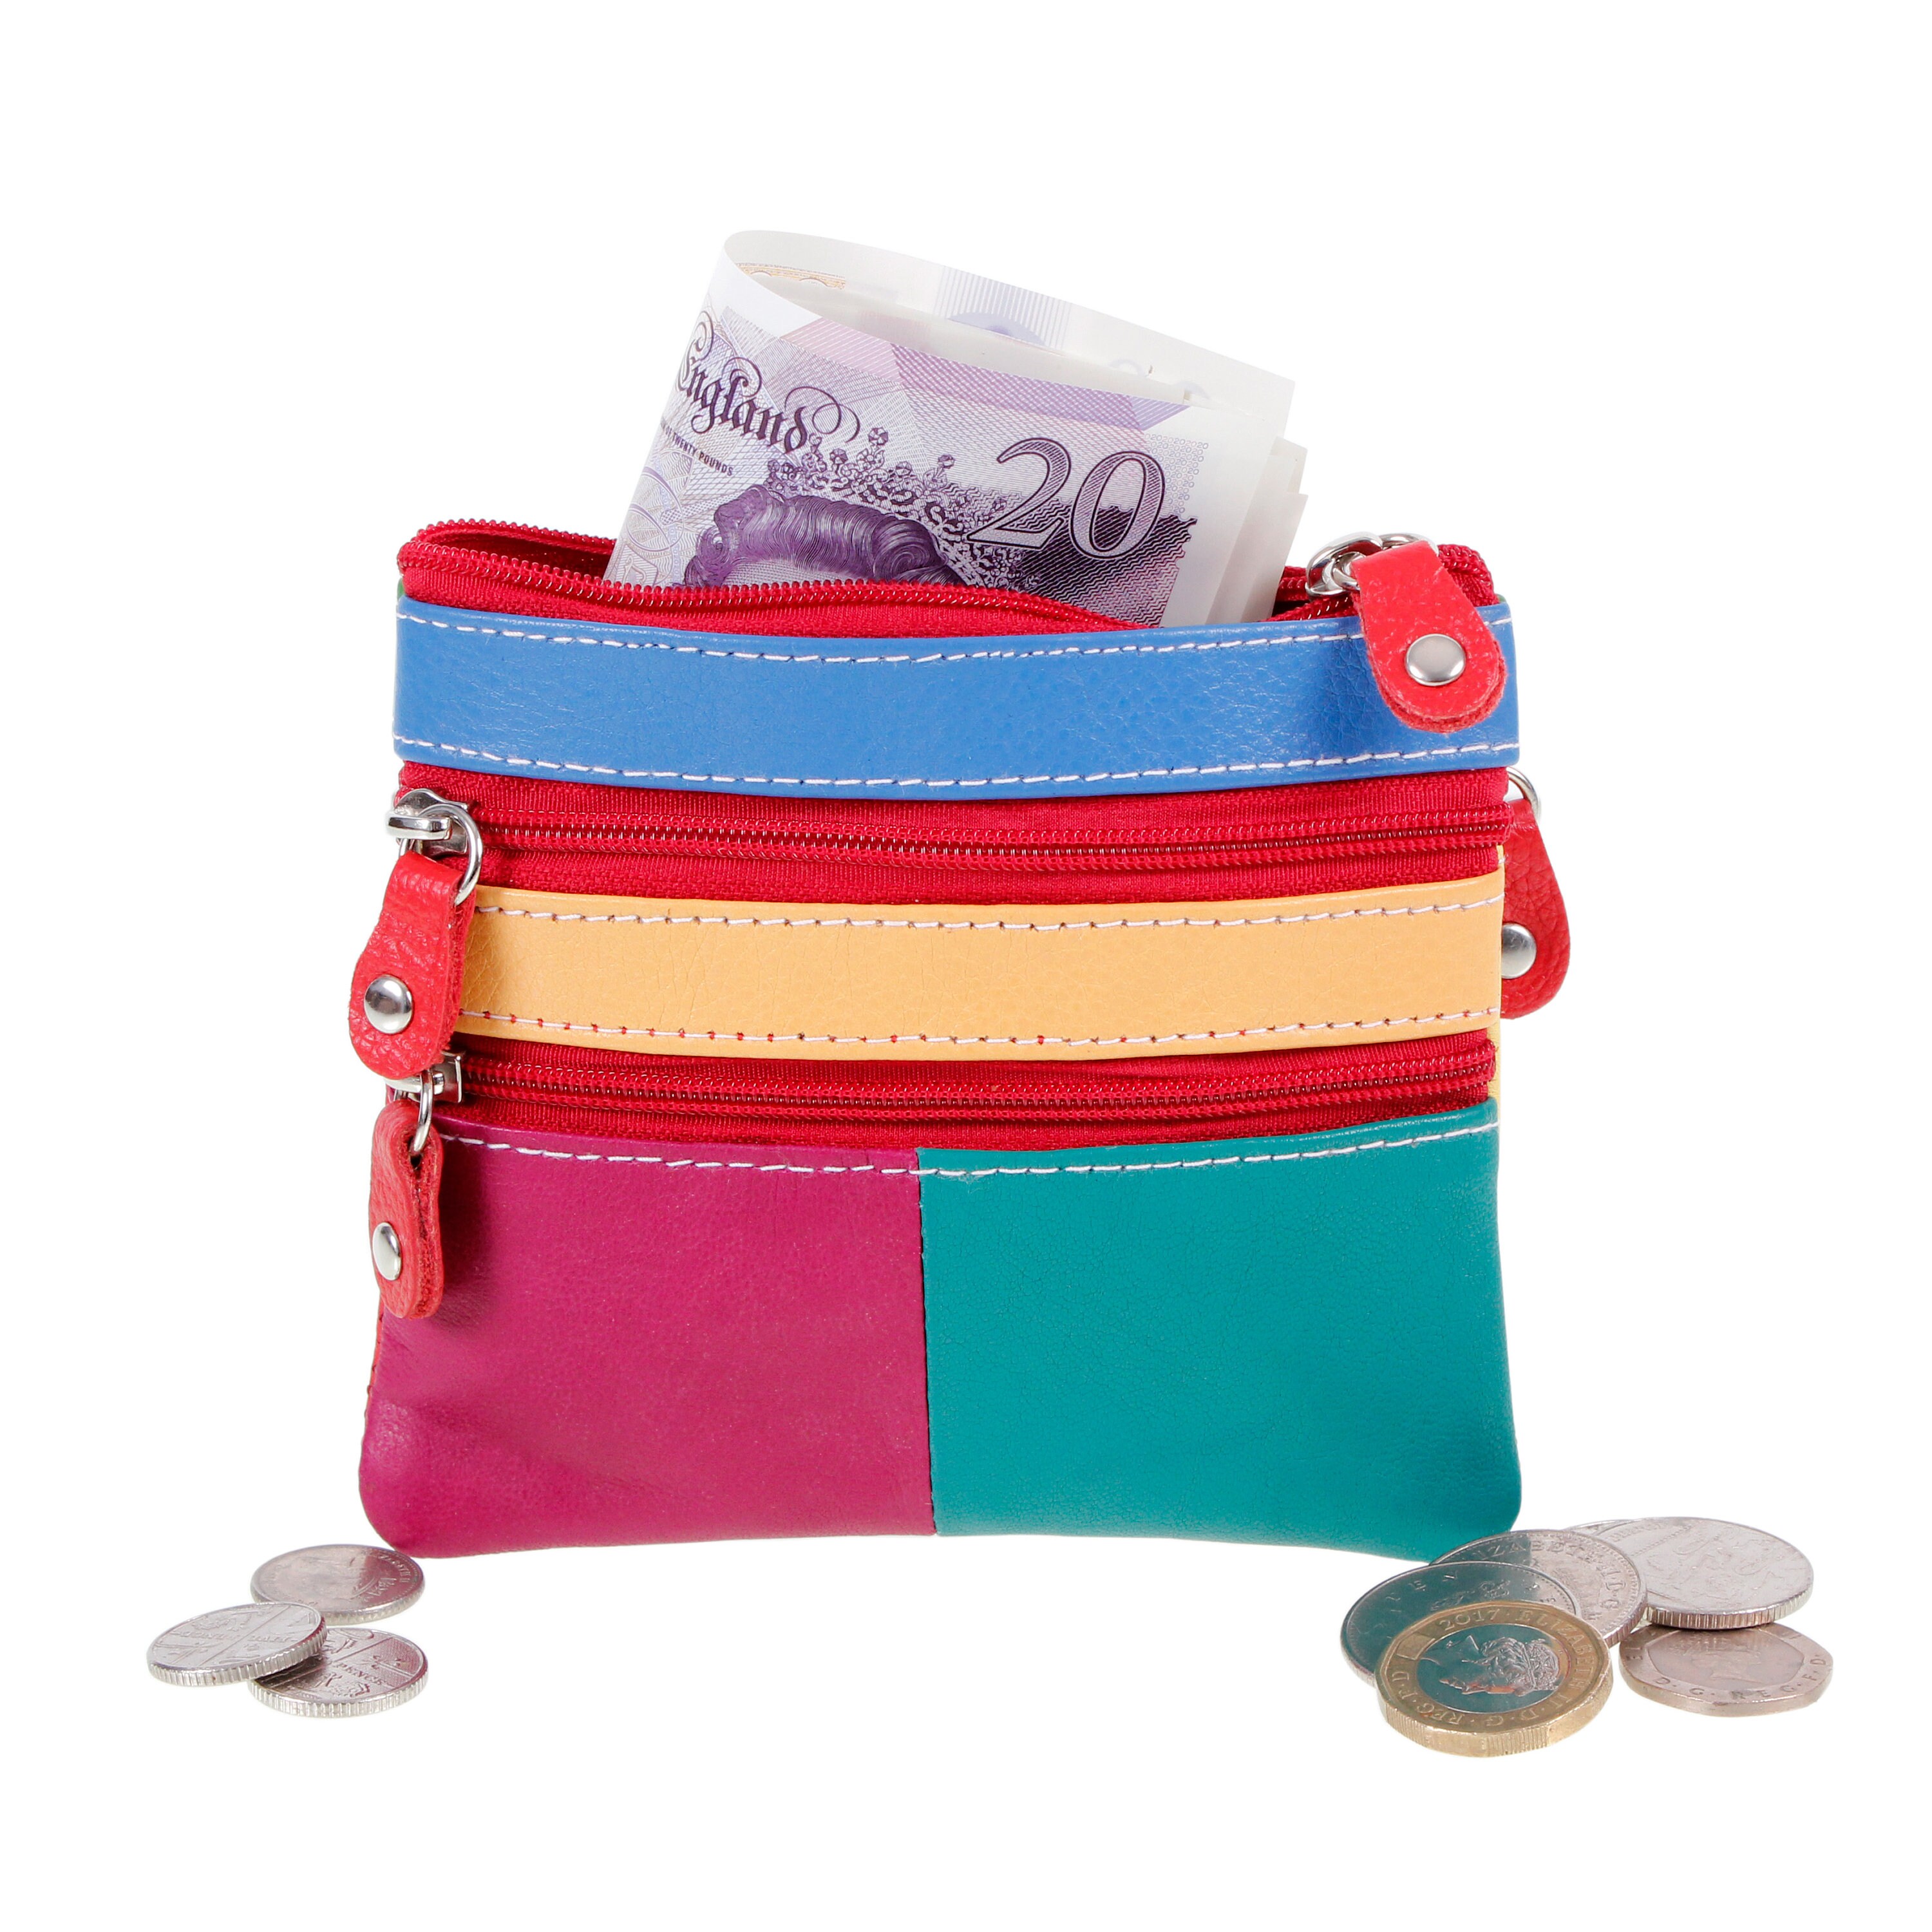 Cricut crafted handbags for the accessory aficionado – Cricut